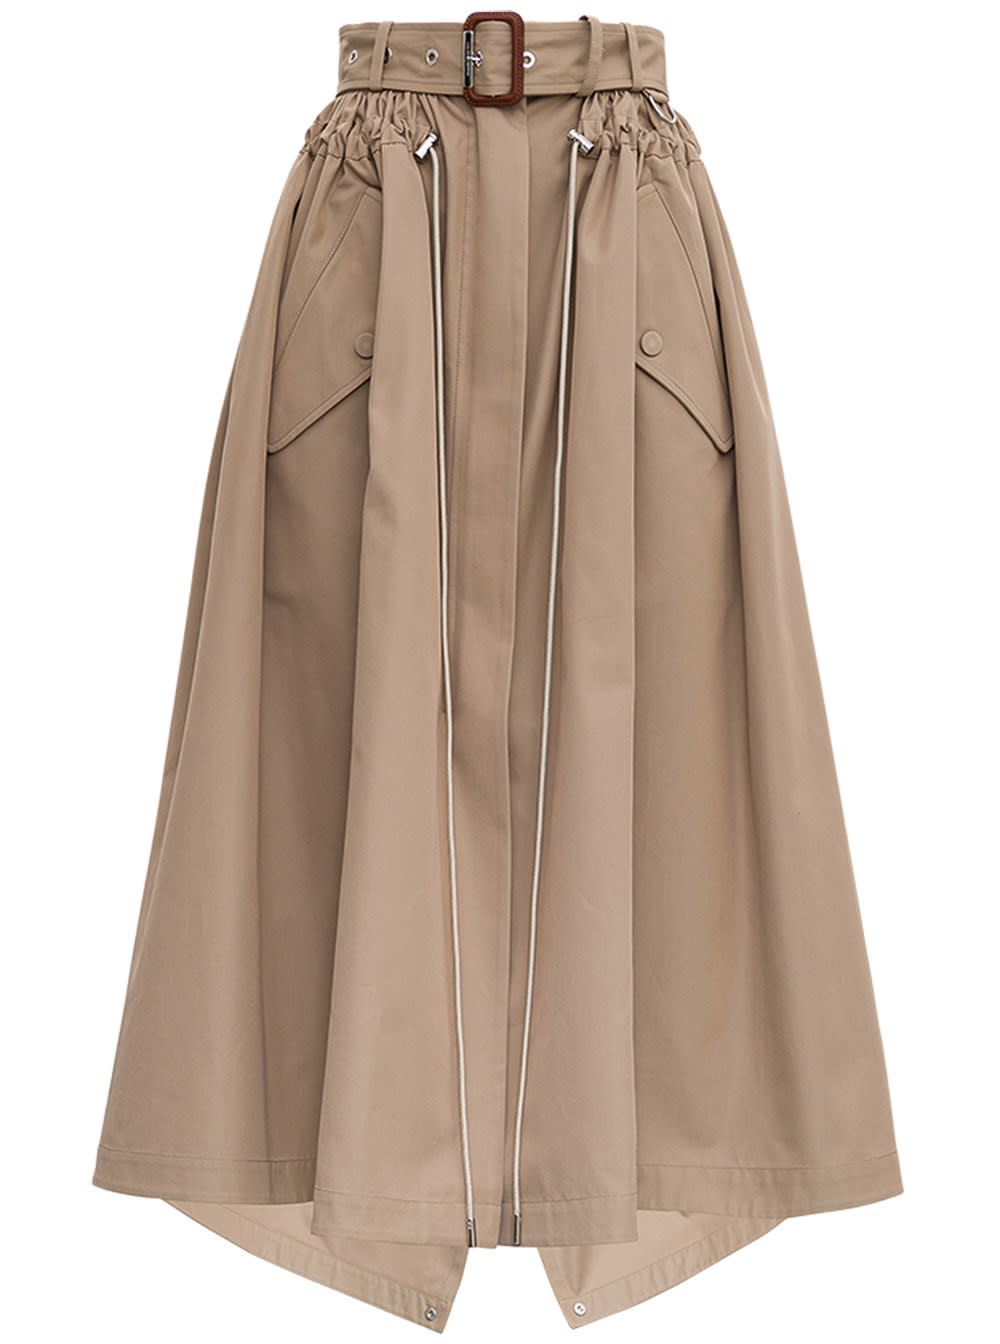 Alexander McQueen Beige Cotton Skirt With Belt